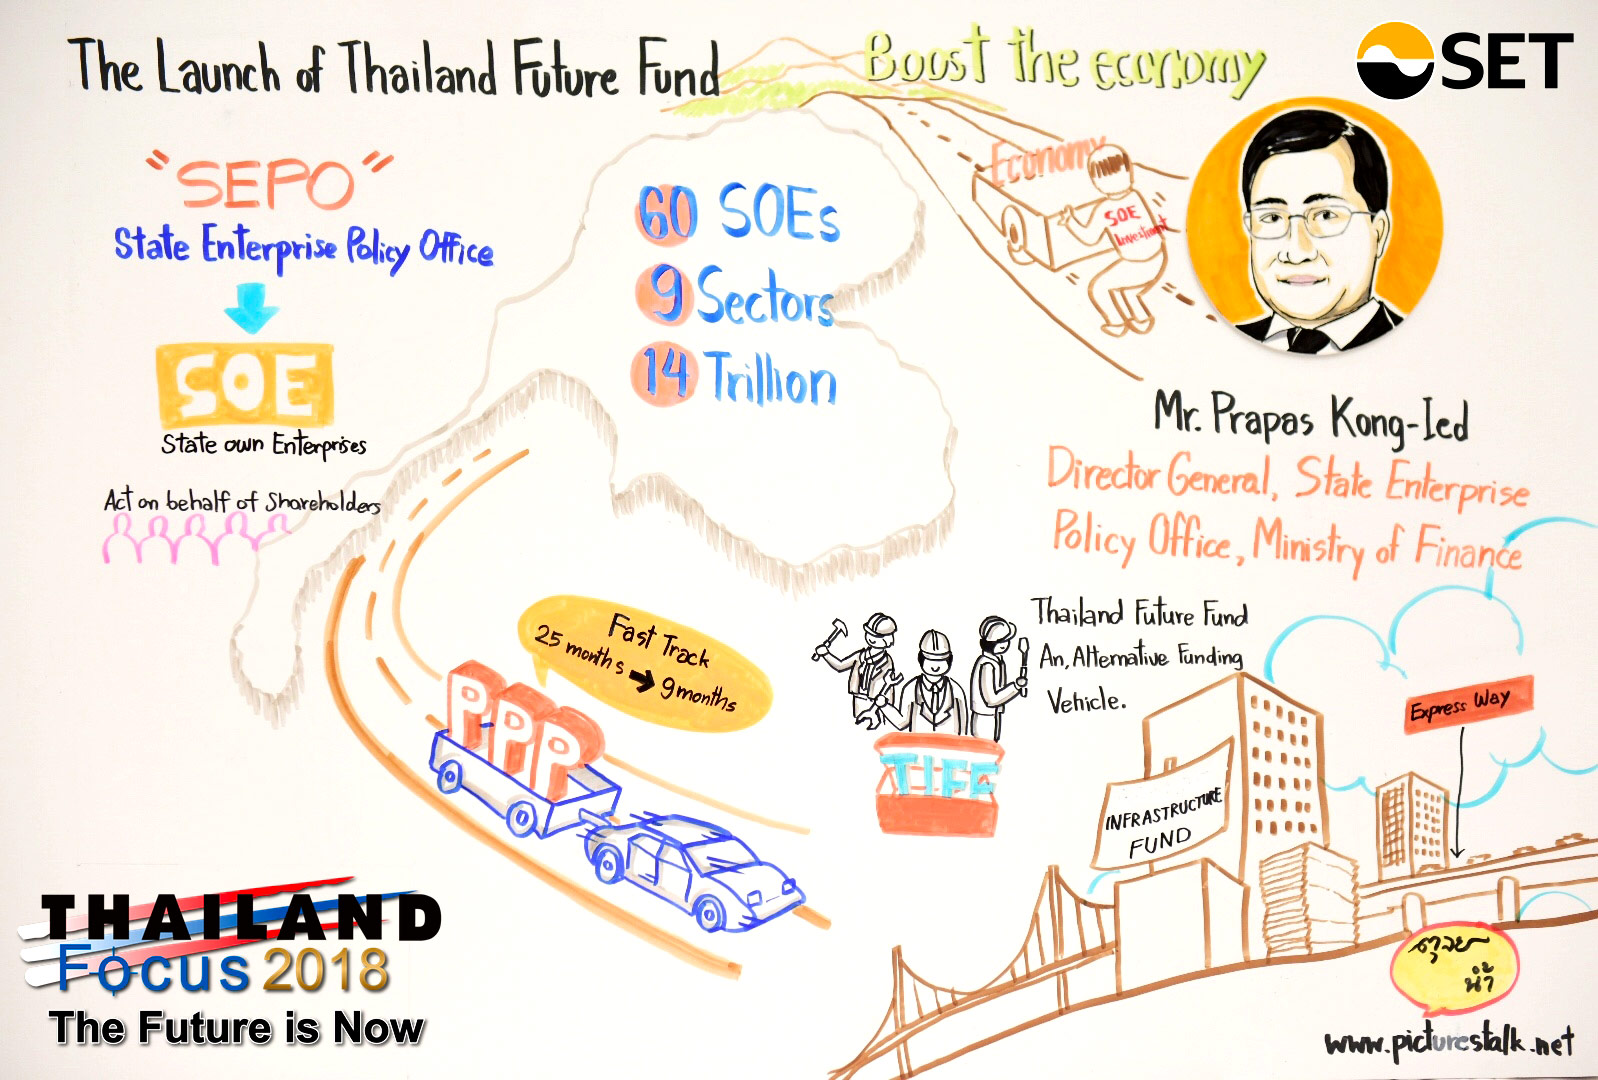 Thailand Focus 2018 - The Launch of Thailand Future Fund - Mr. Prapas Kong-Ied